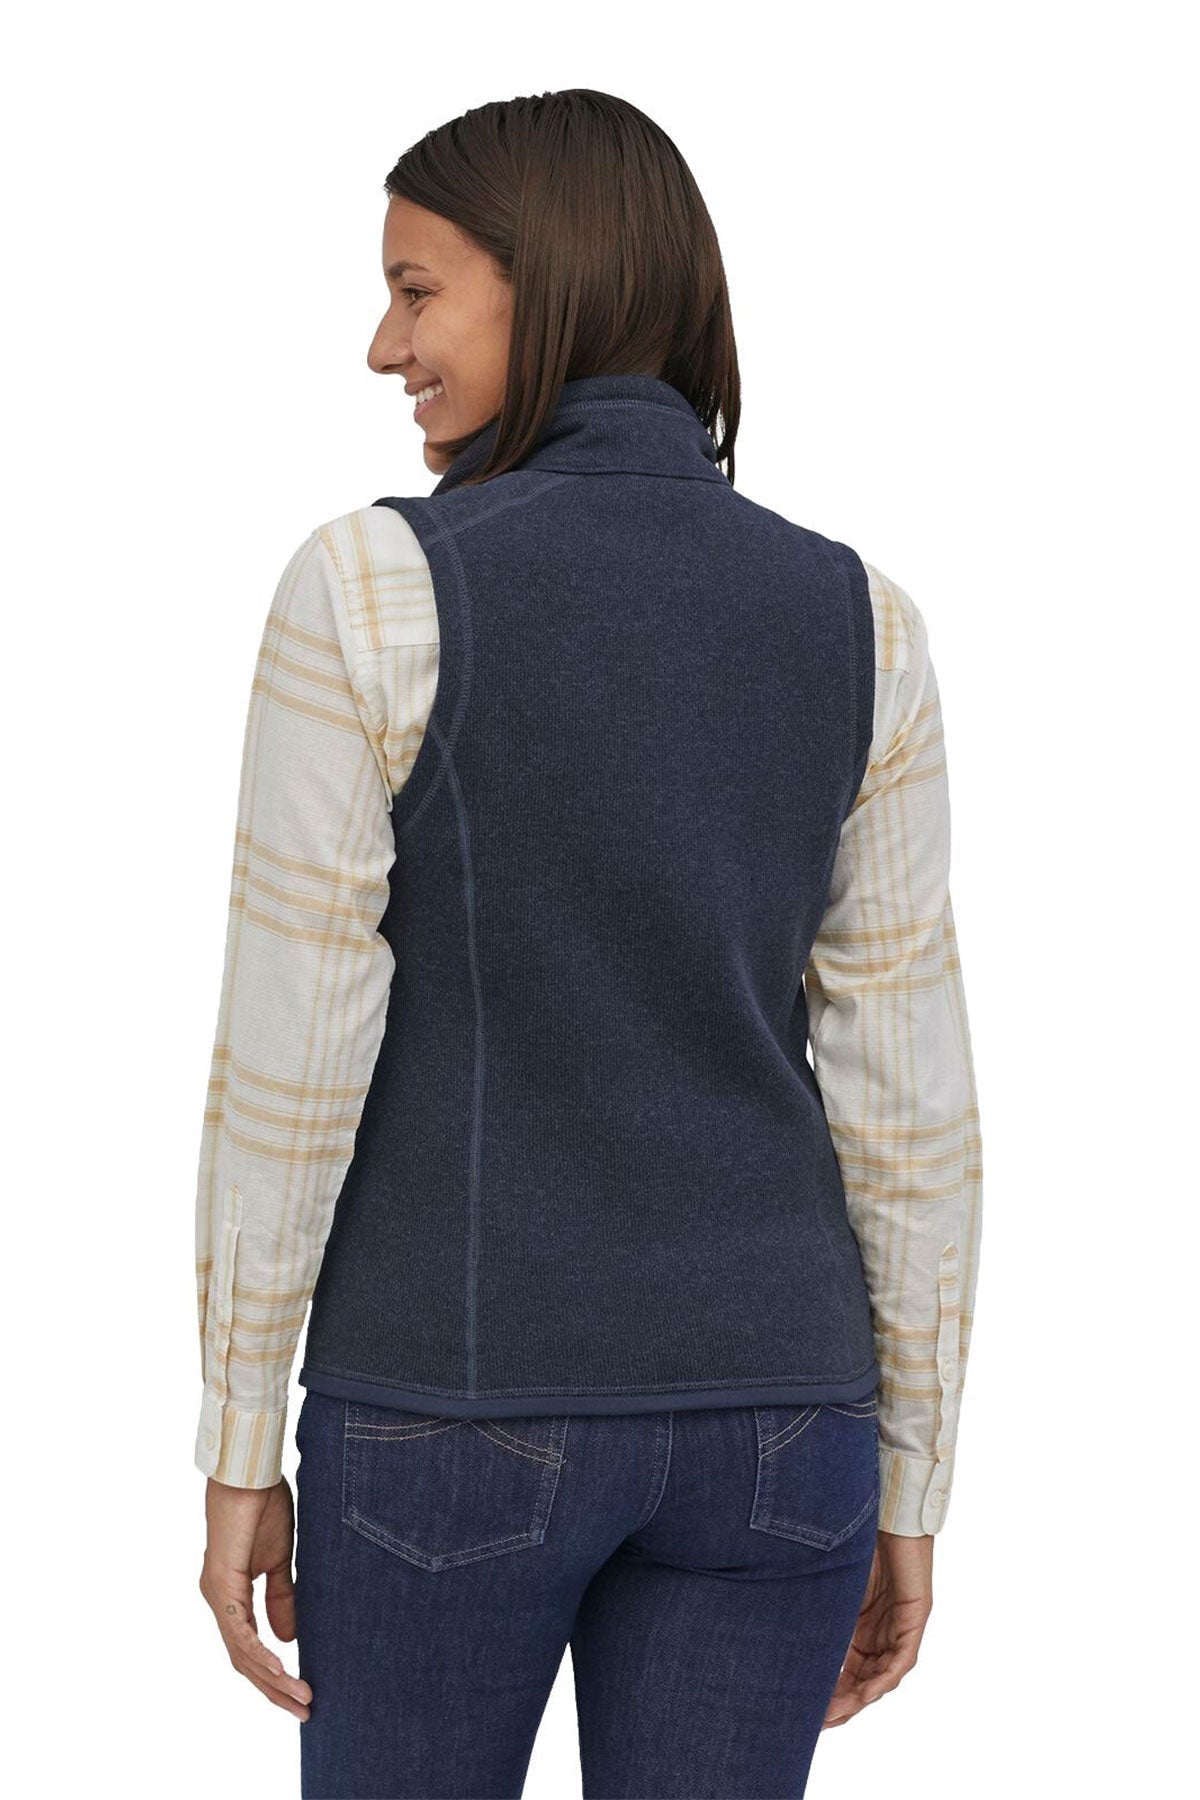 Patagonia Women's Better Sweater Fleece Customized Vests, New Navy